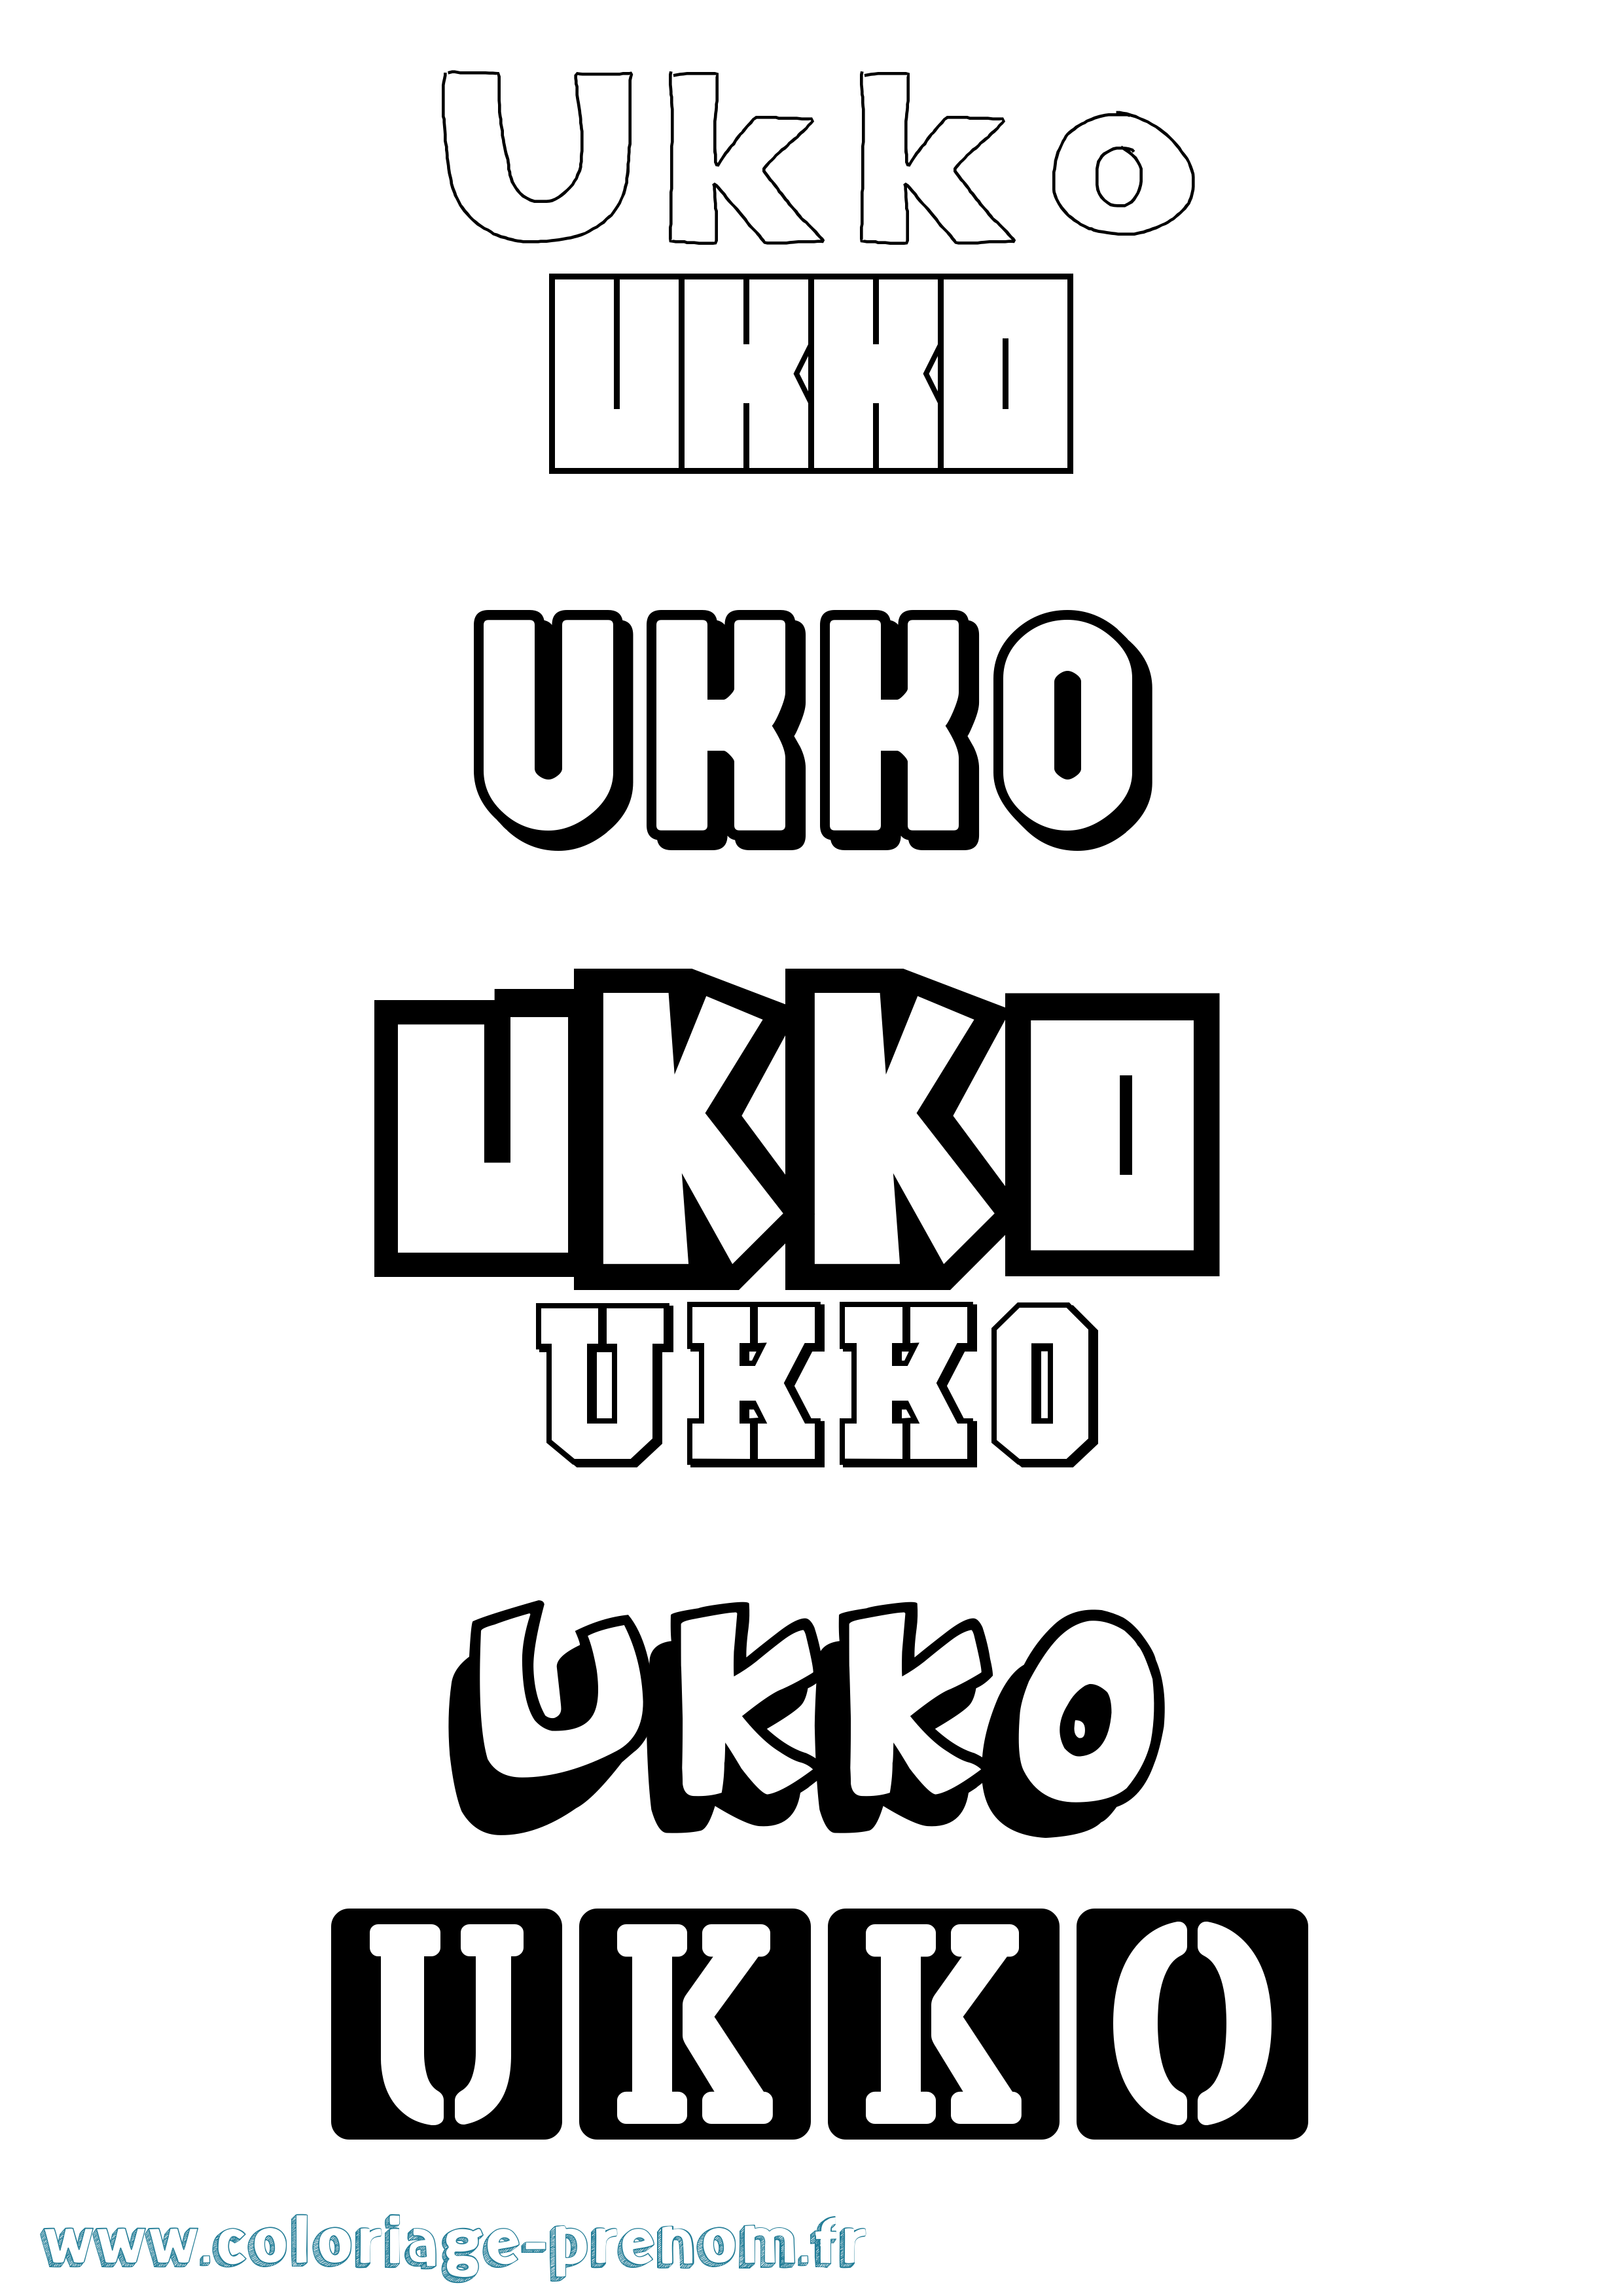 Coloriage prénom Ukko Simple